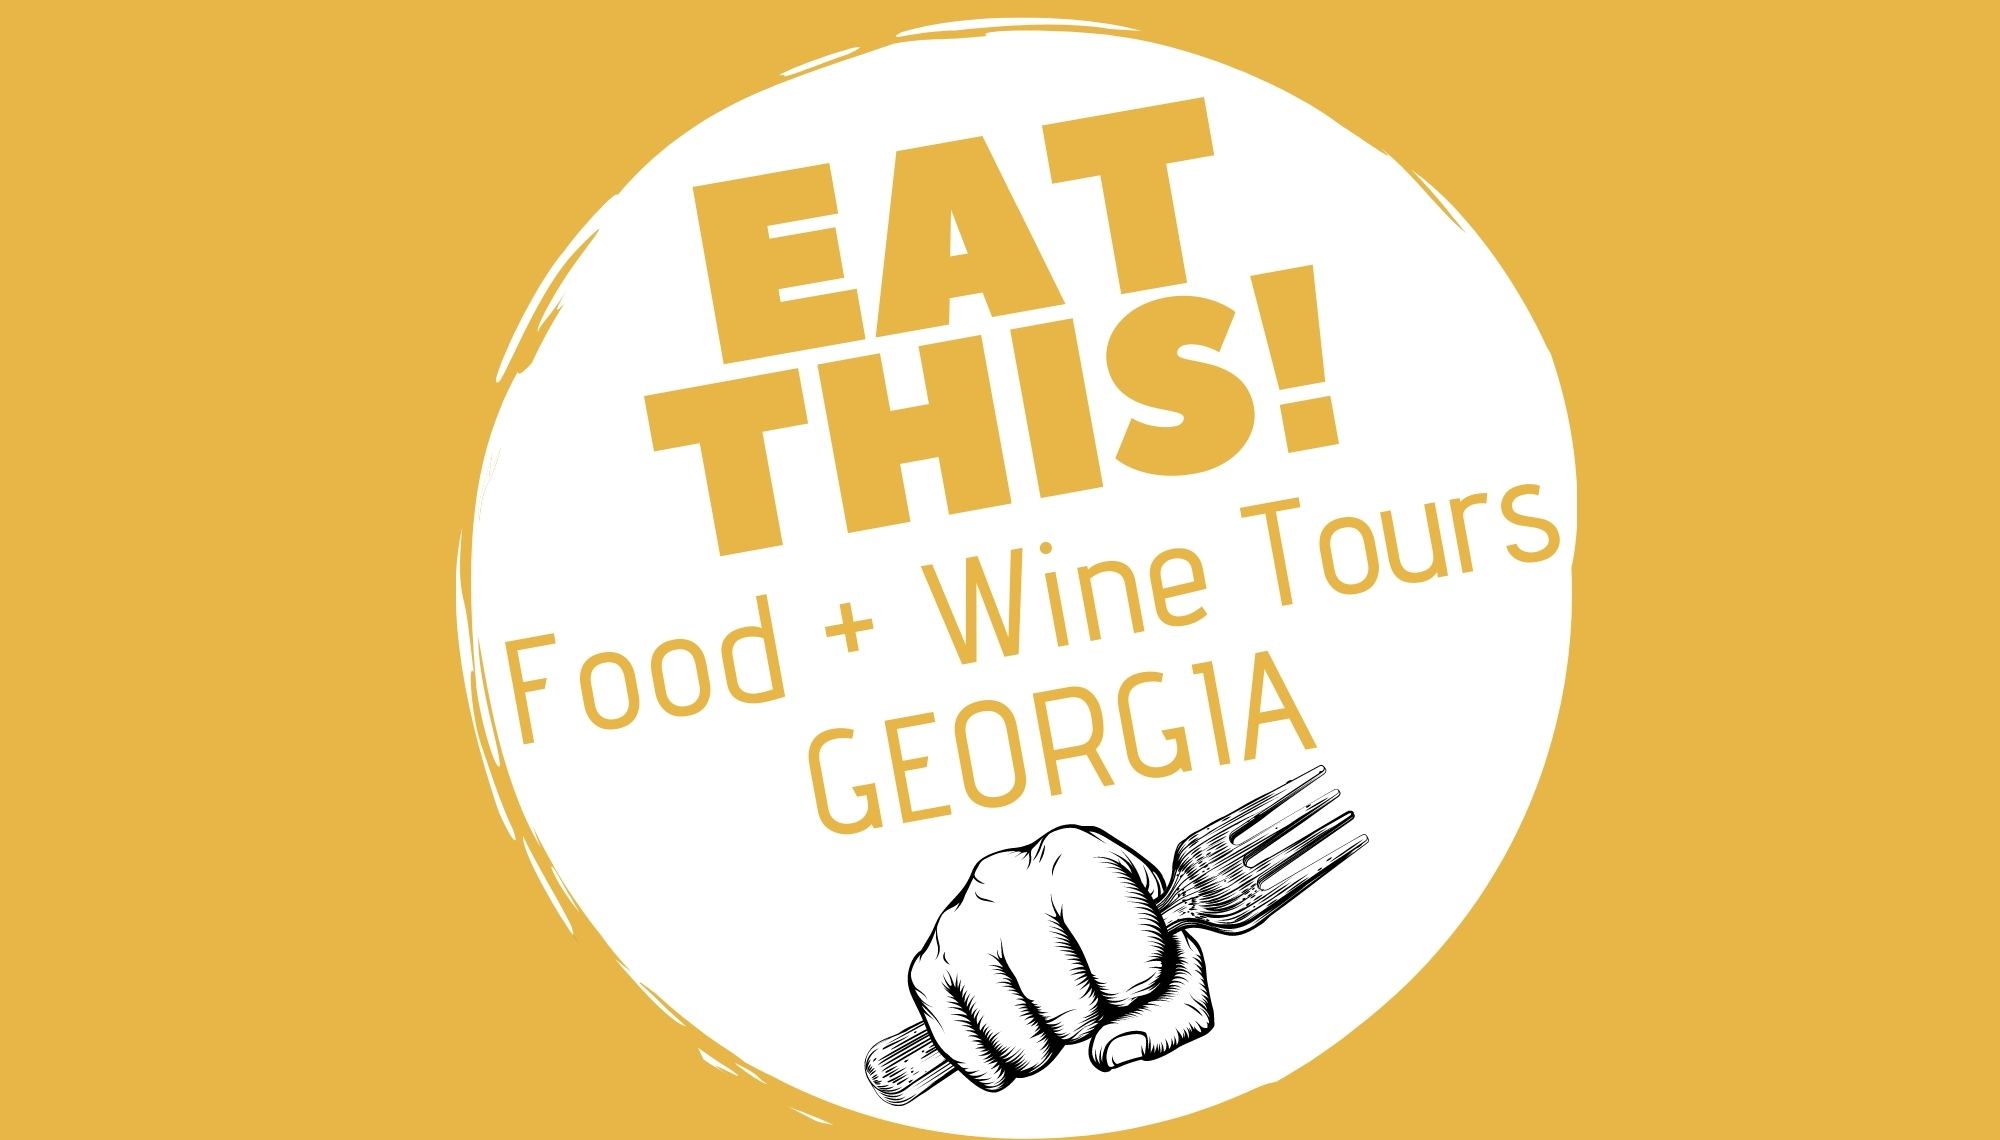 eat this tours logo